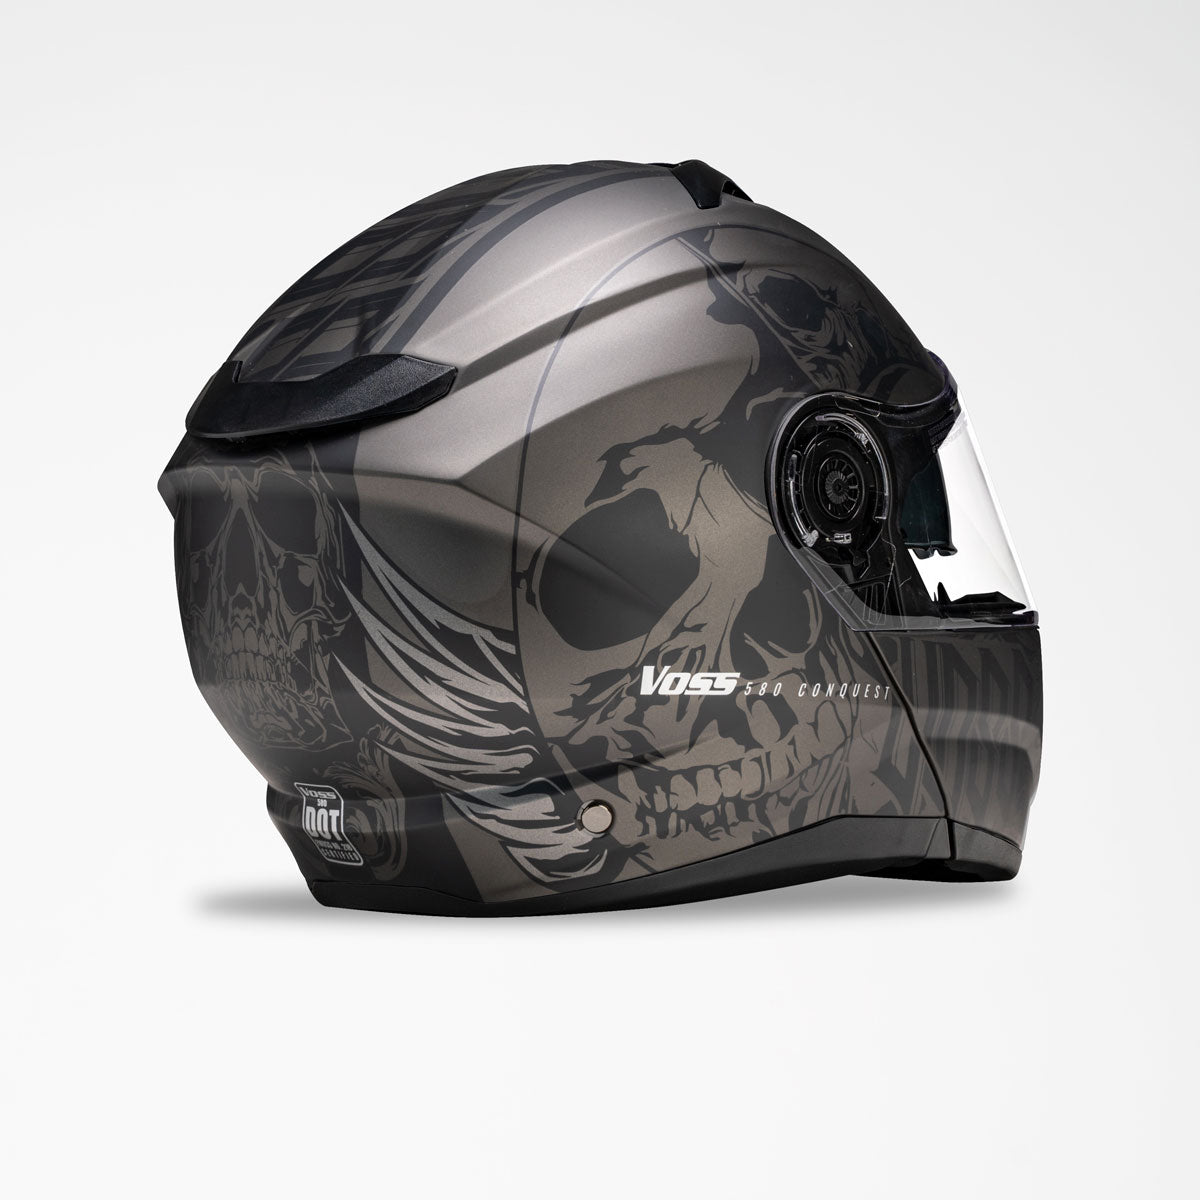 Voss 580 Conquest Two Tone Apocalypse Helmet